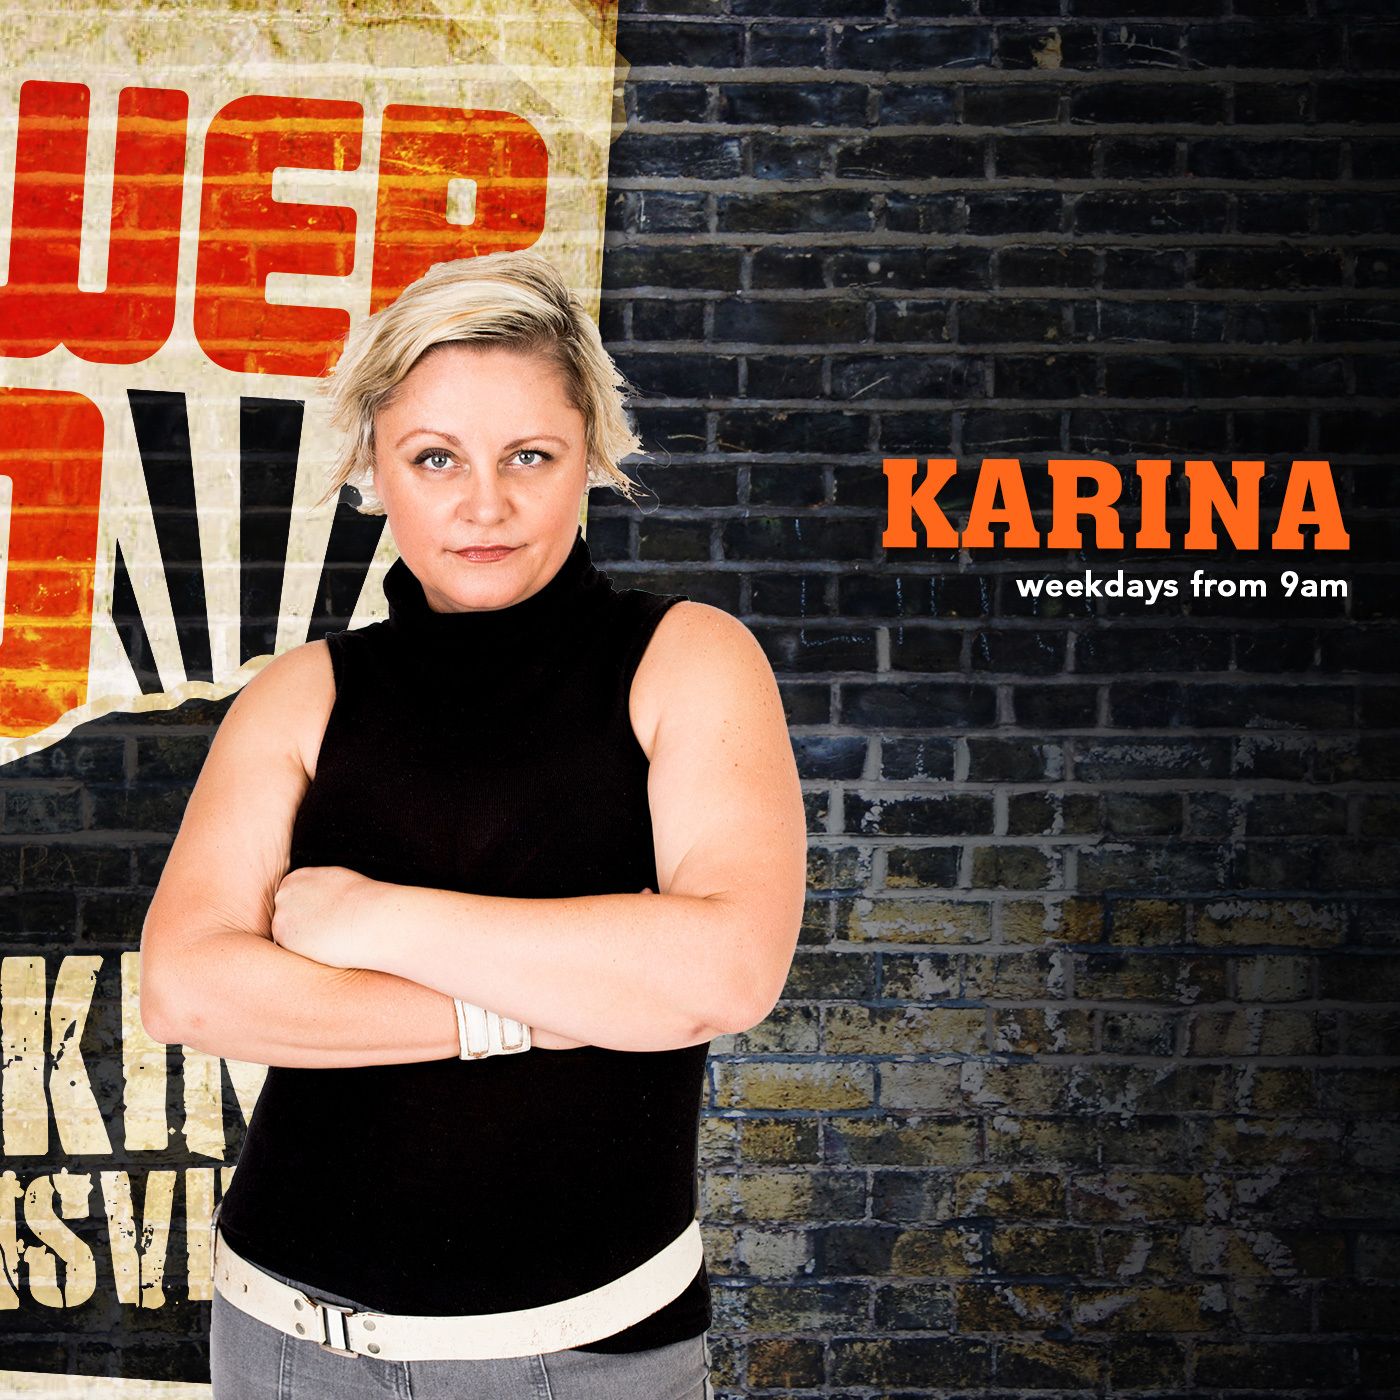 Friends, @uploadonprime is now streaming!! Karina the Brazilian